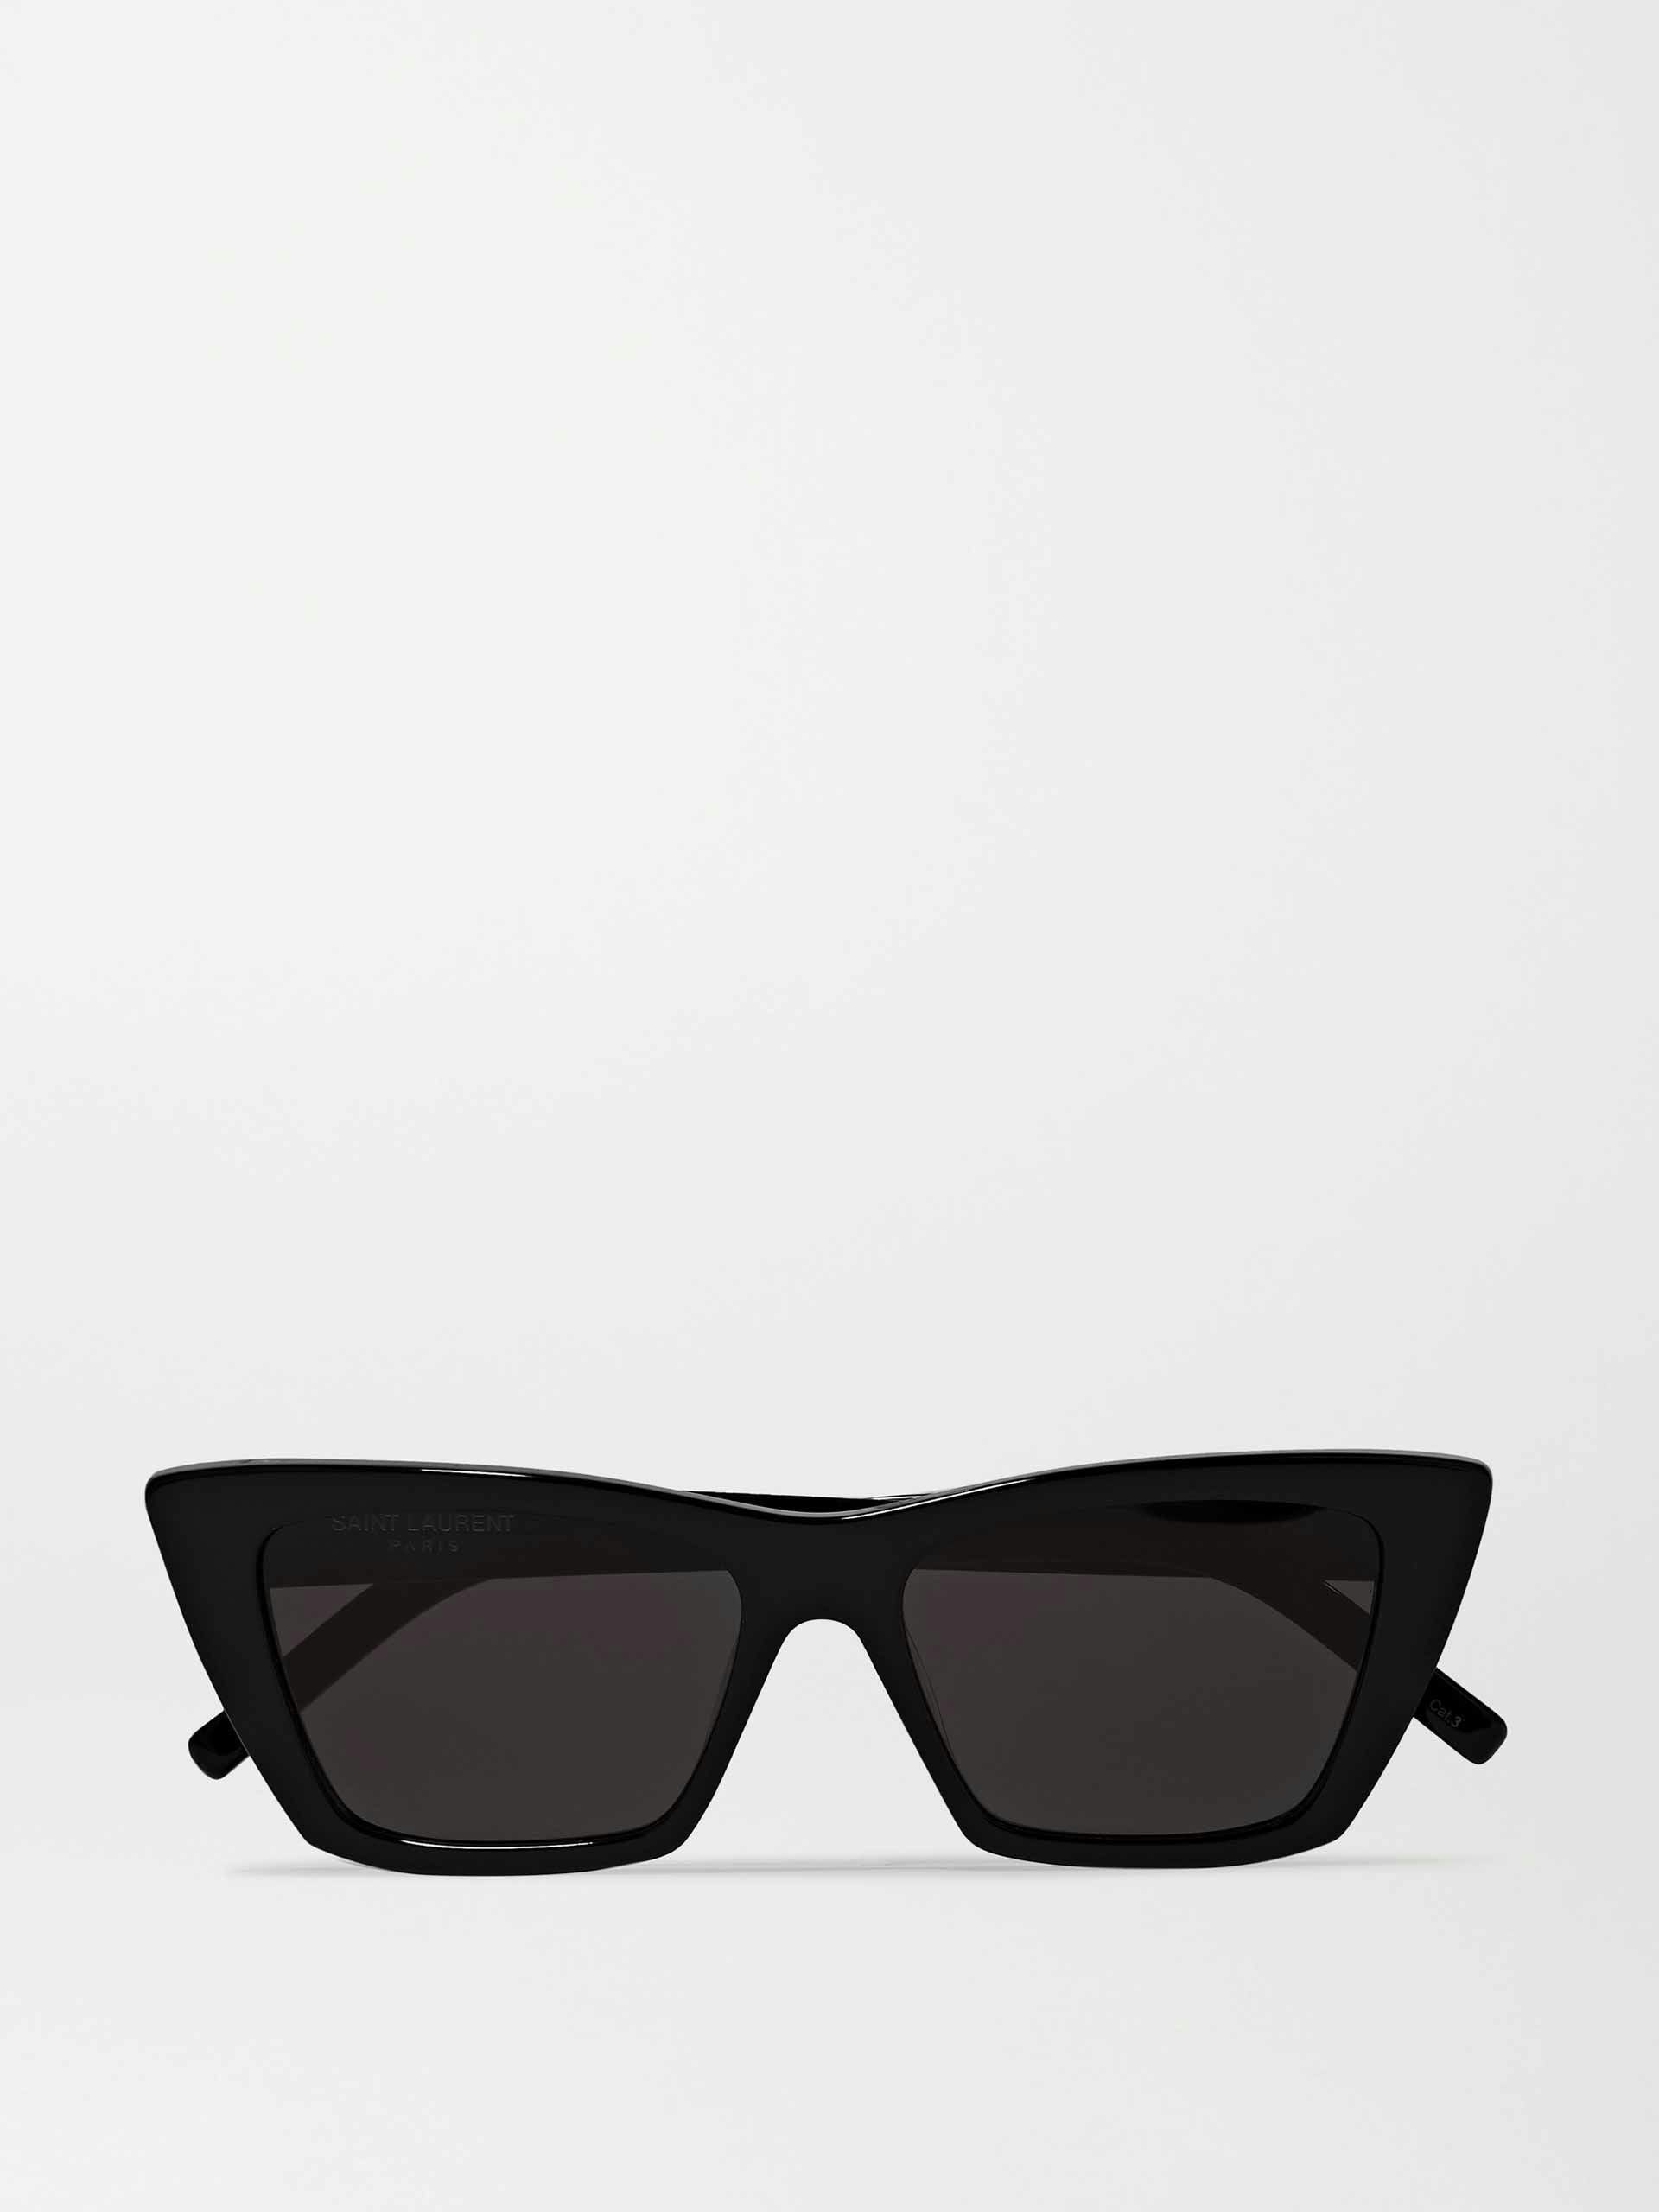 Black cat-eye acetate sunglasses